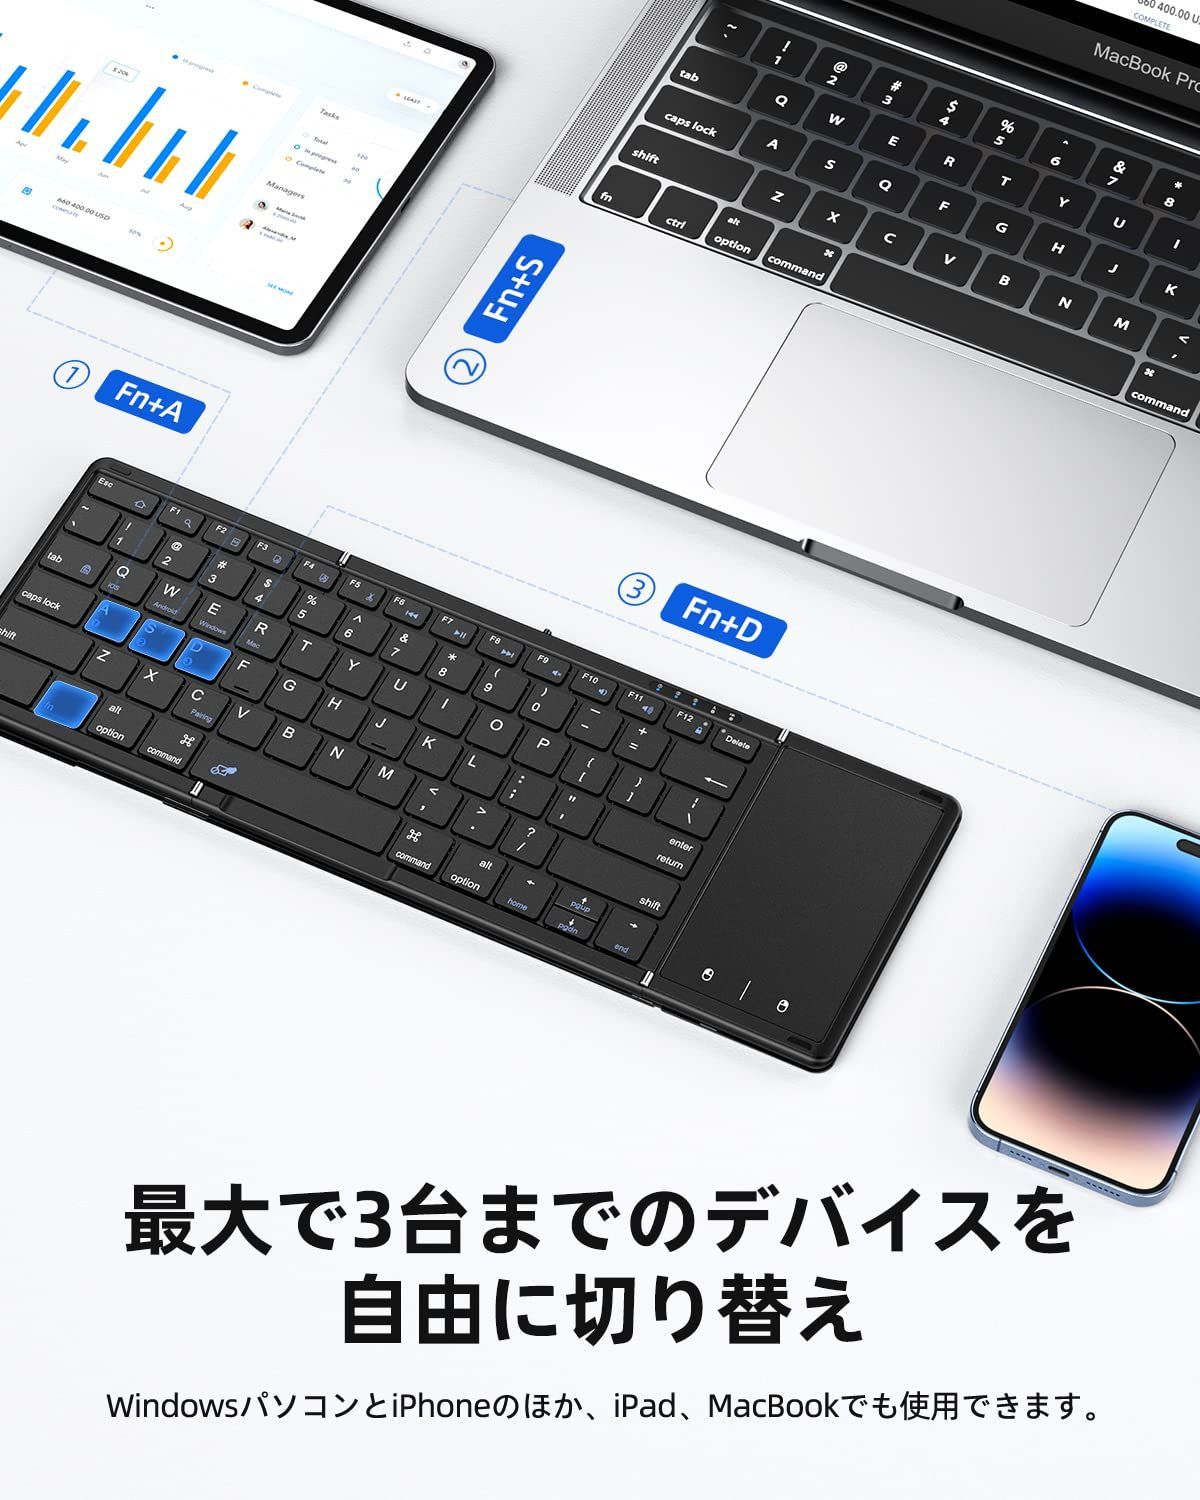 Omikamo Bluetooth キーボード 折り畳み式 ワイヤレス キーボー ...